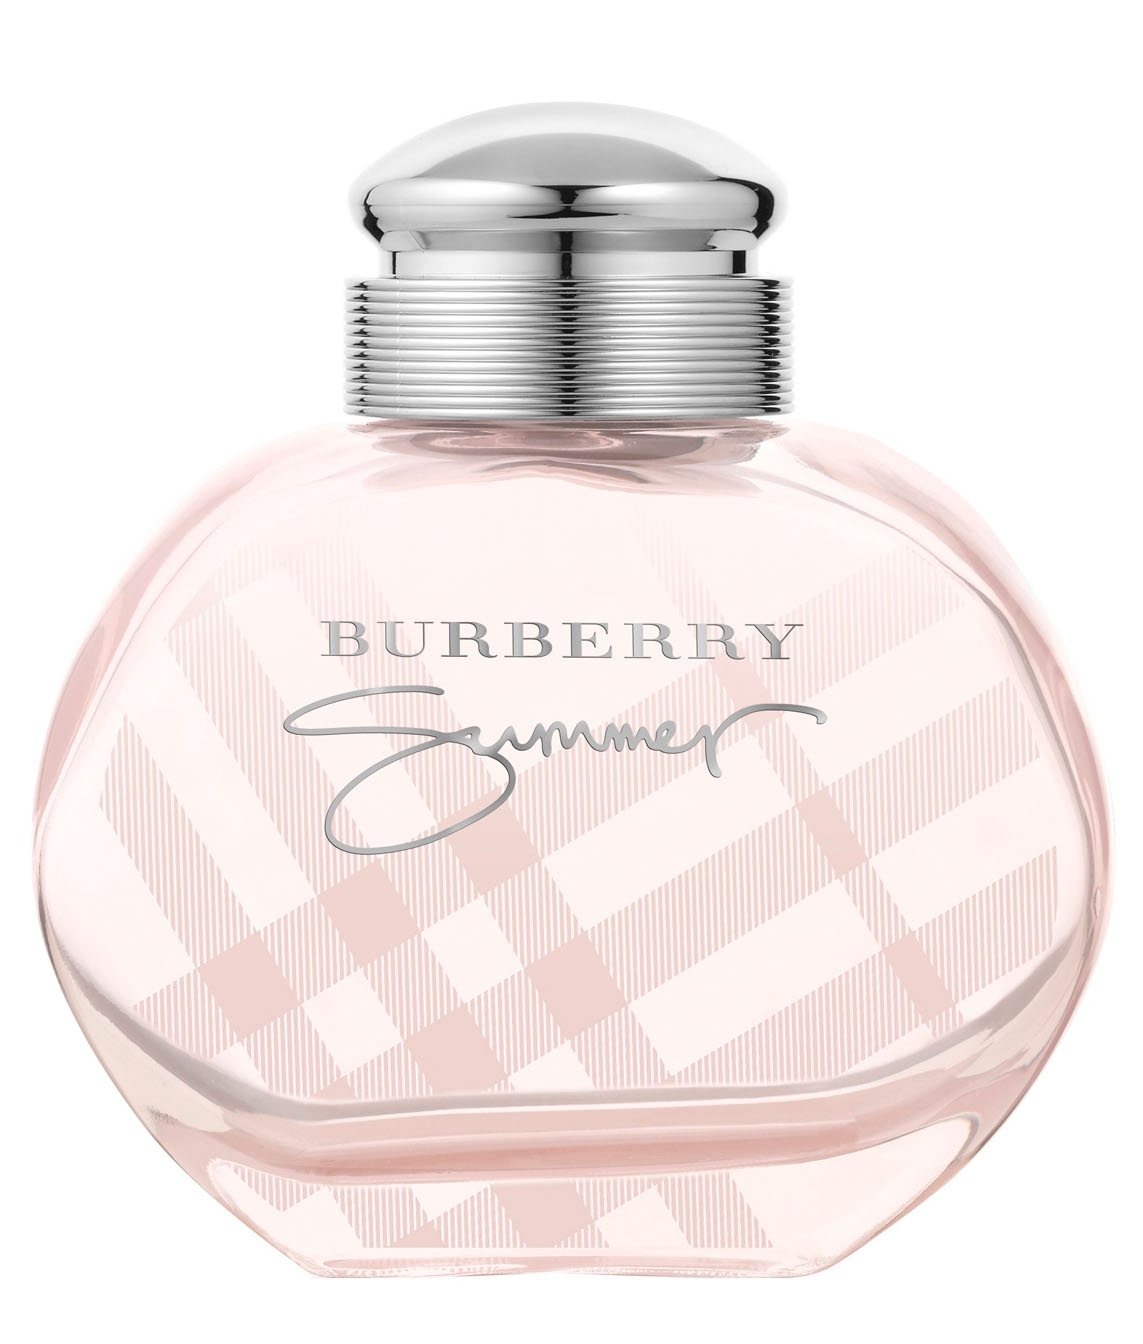 Burberry Summer for women